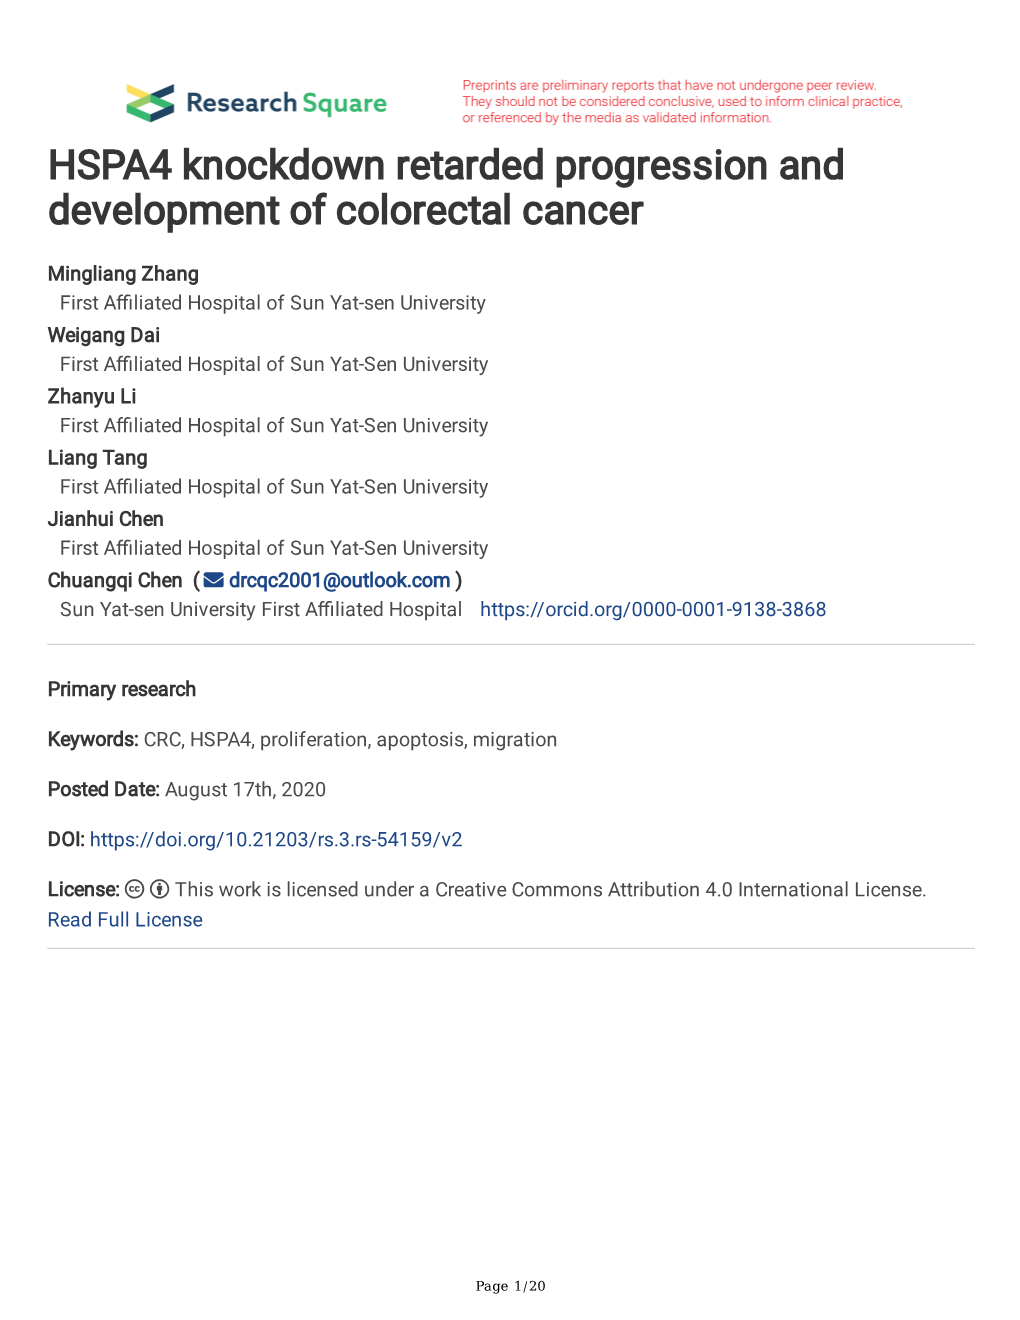 HSPA4 Knockdown Retarded Progression and Development of Colorectal Cancer